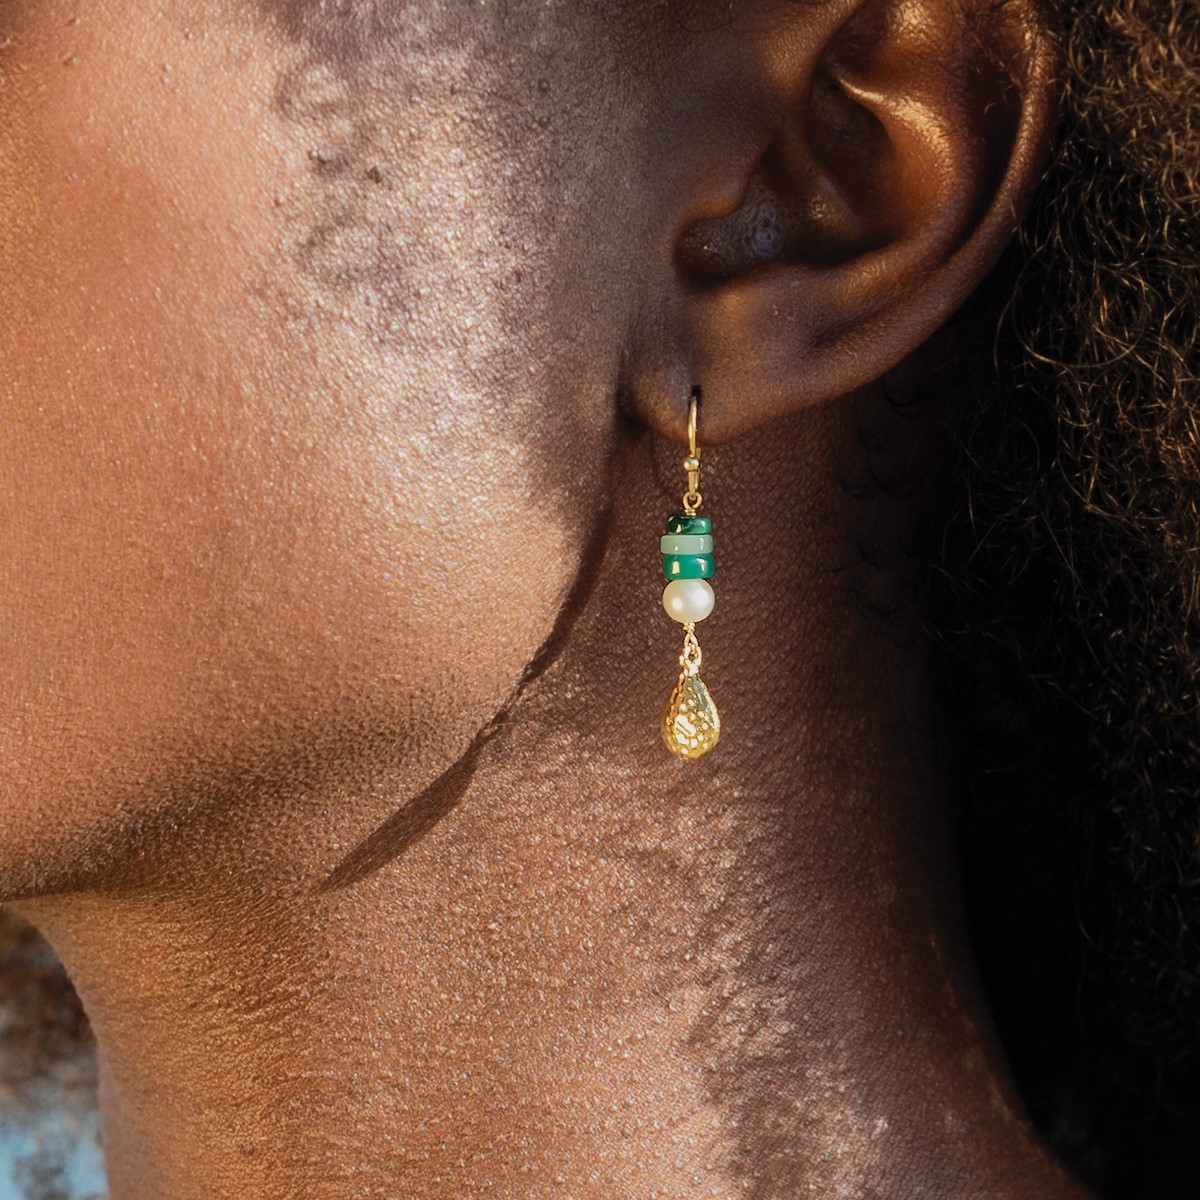 Sarah Alexander Byzantine Gold Gemstone Earrings